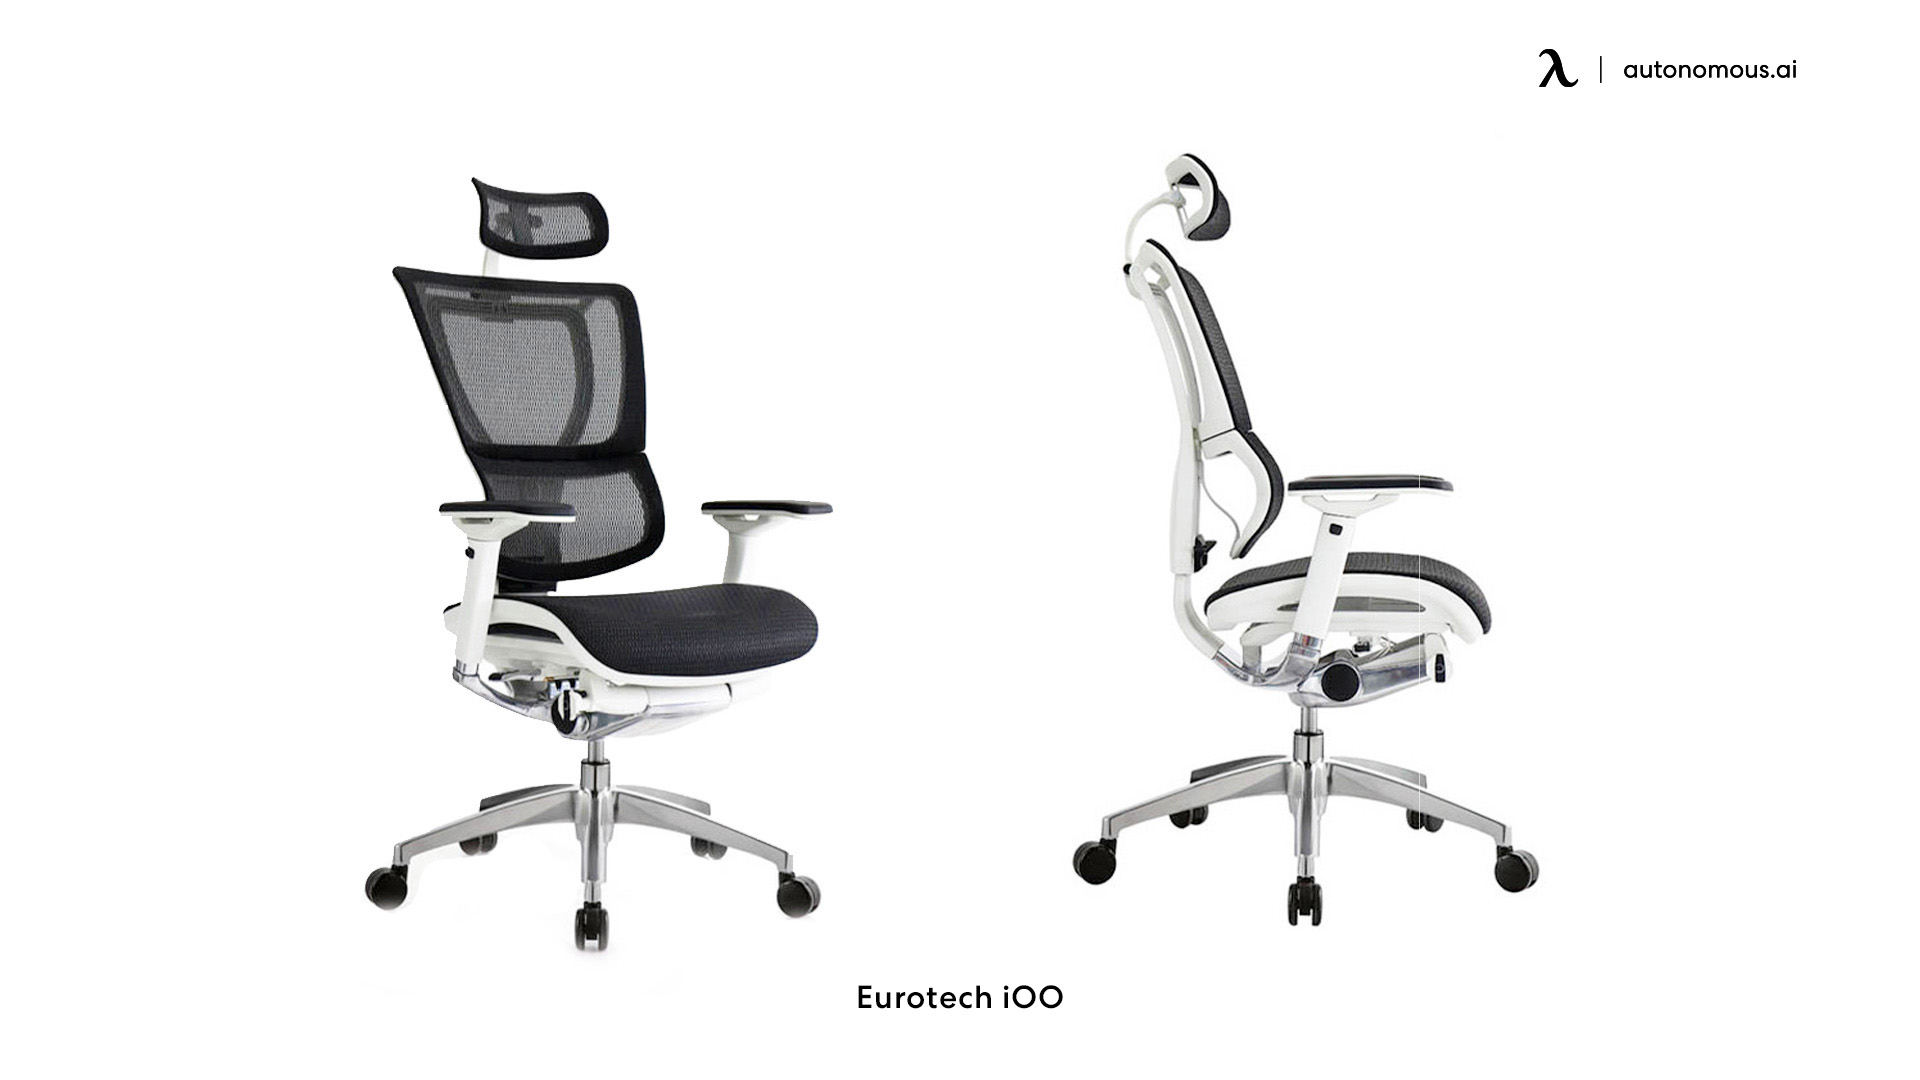 Eurotech iOO affordable mesh chair